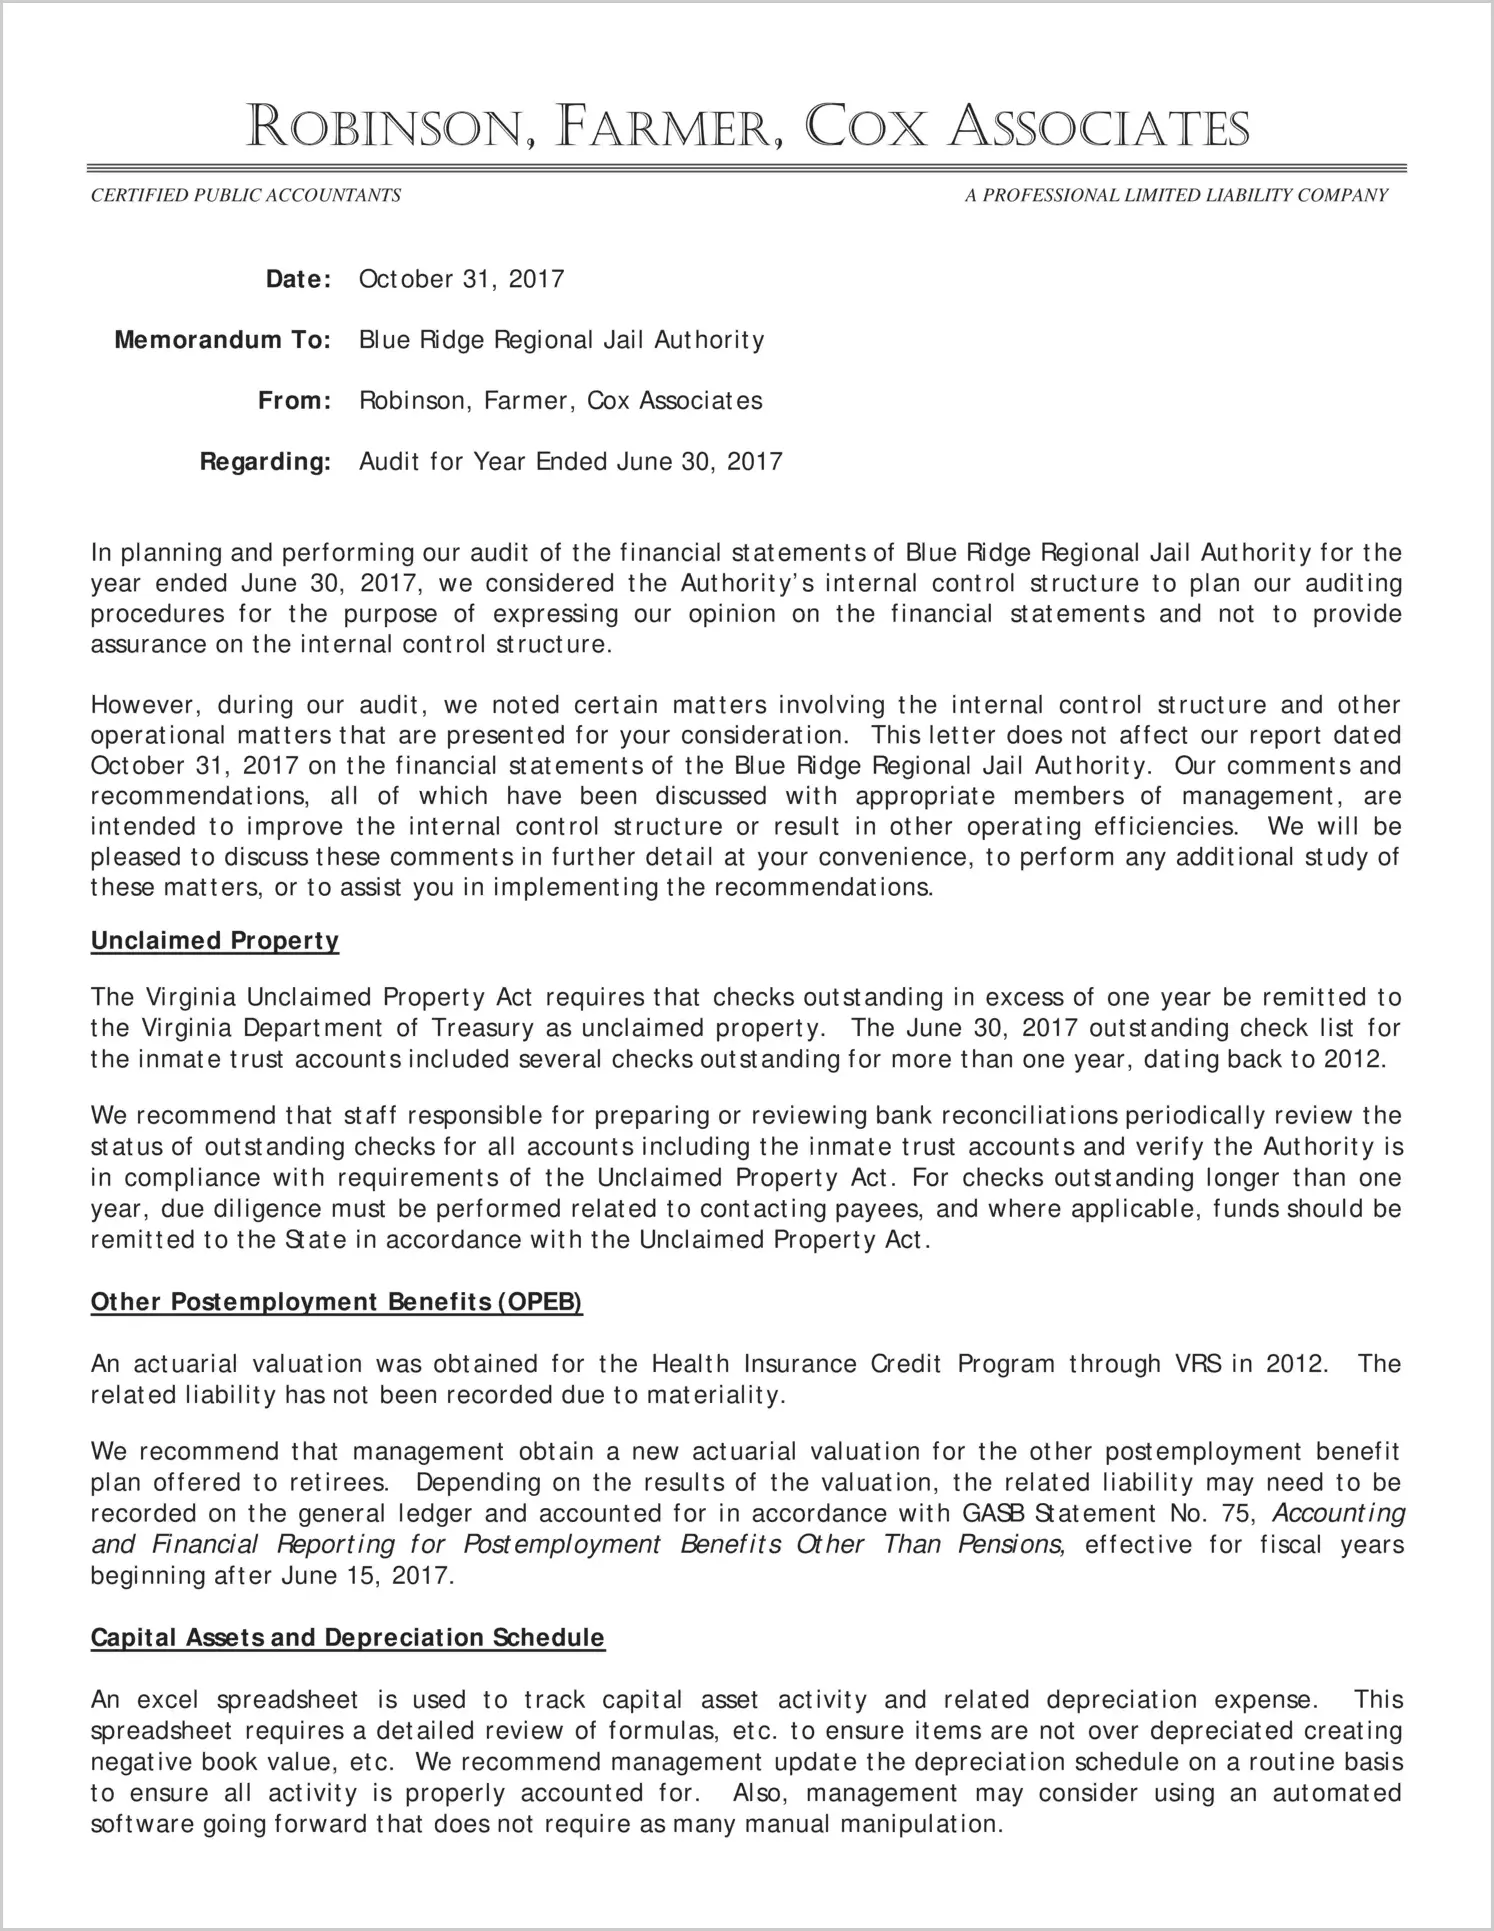 2017 ABC/Other Management Letter for Blue Ridge Regional Jail Authority